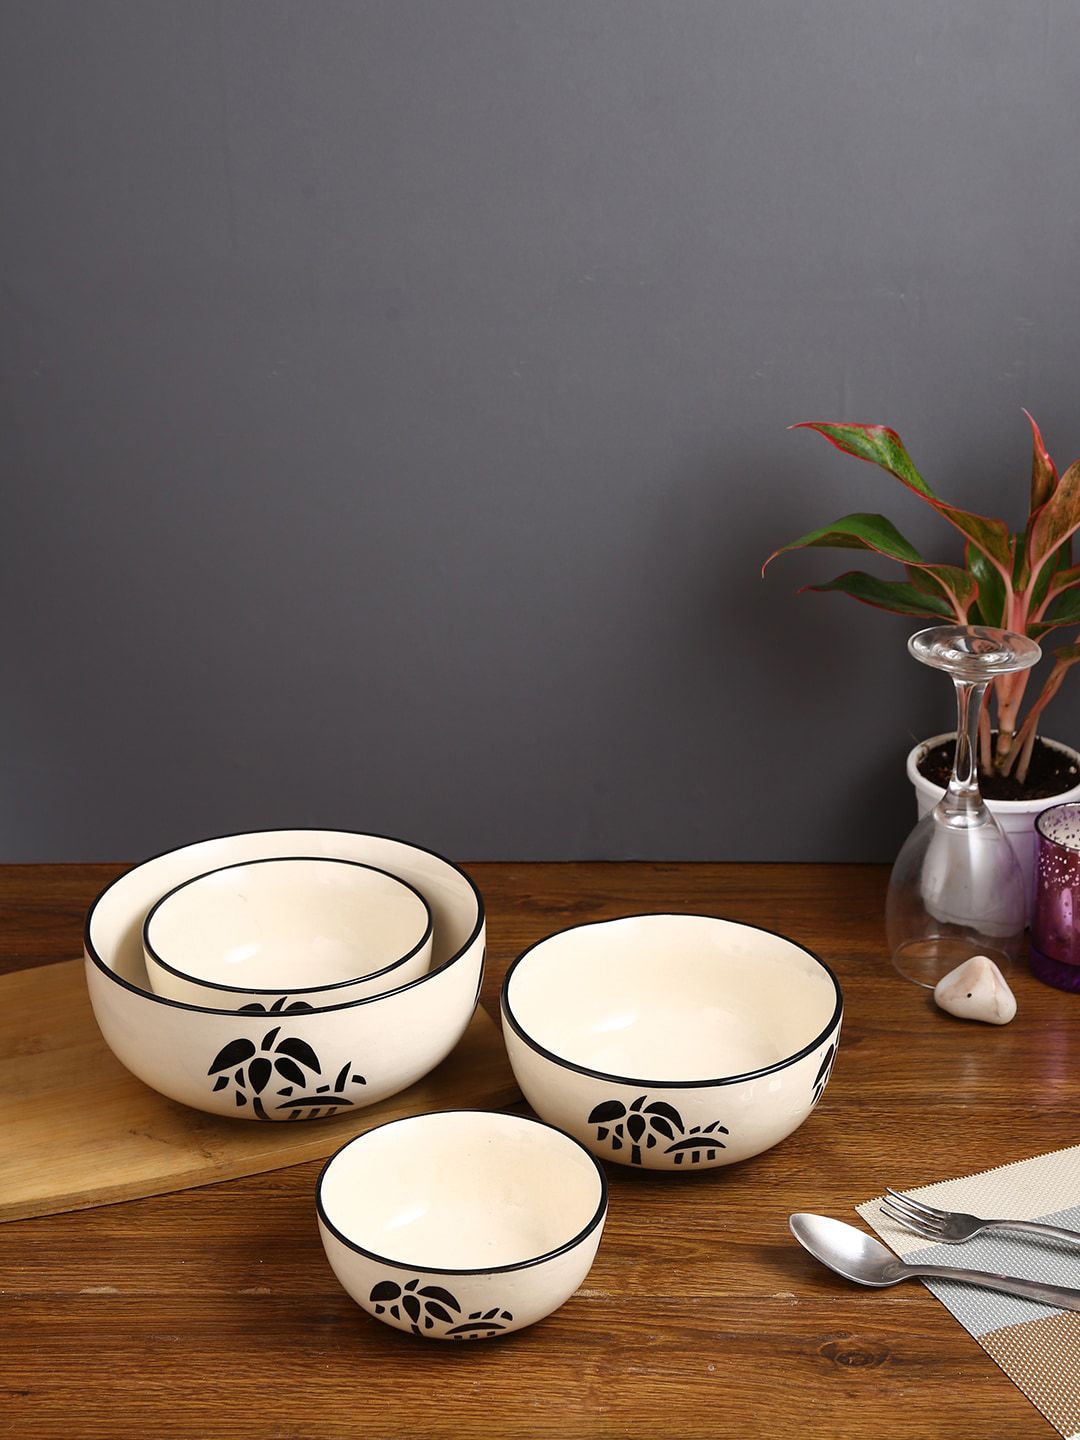 Aapno Rajasthan Set Of 4 White & Black Printed Ceramic Serving Bowls Price in India